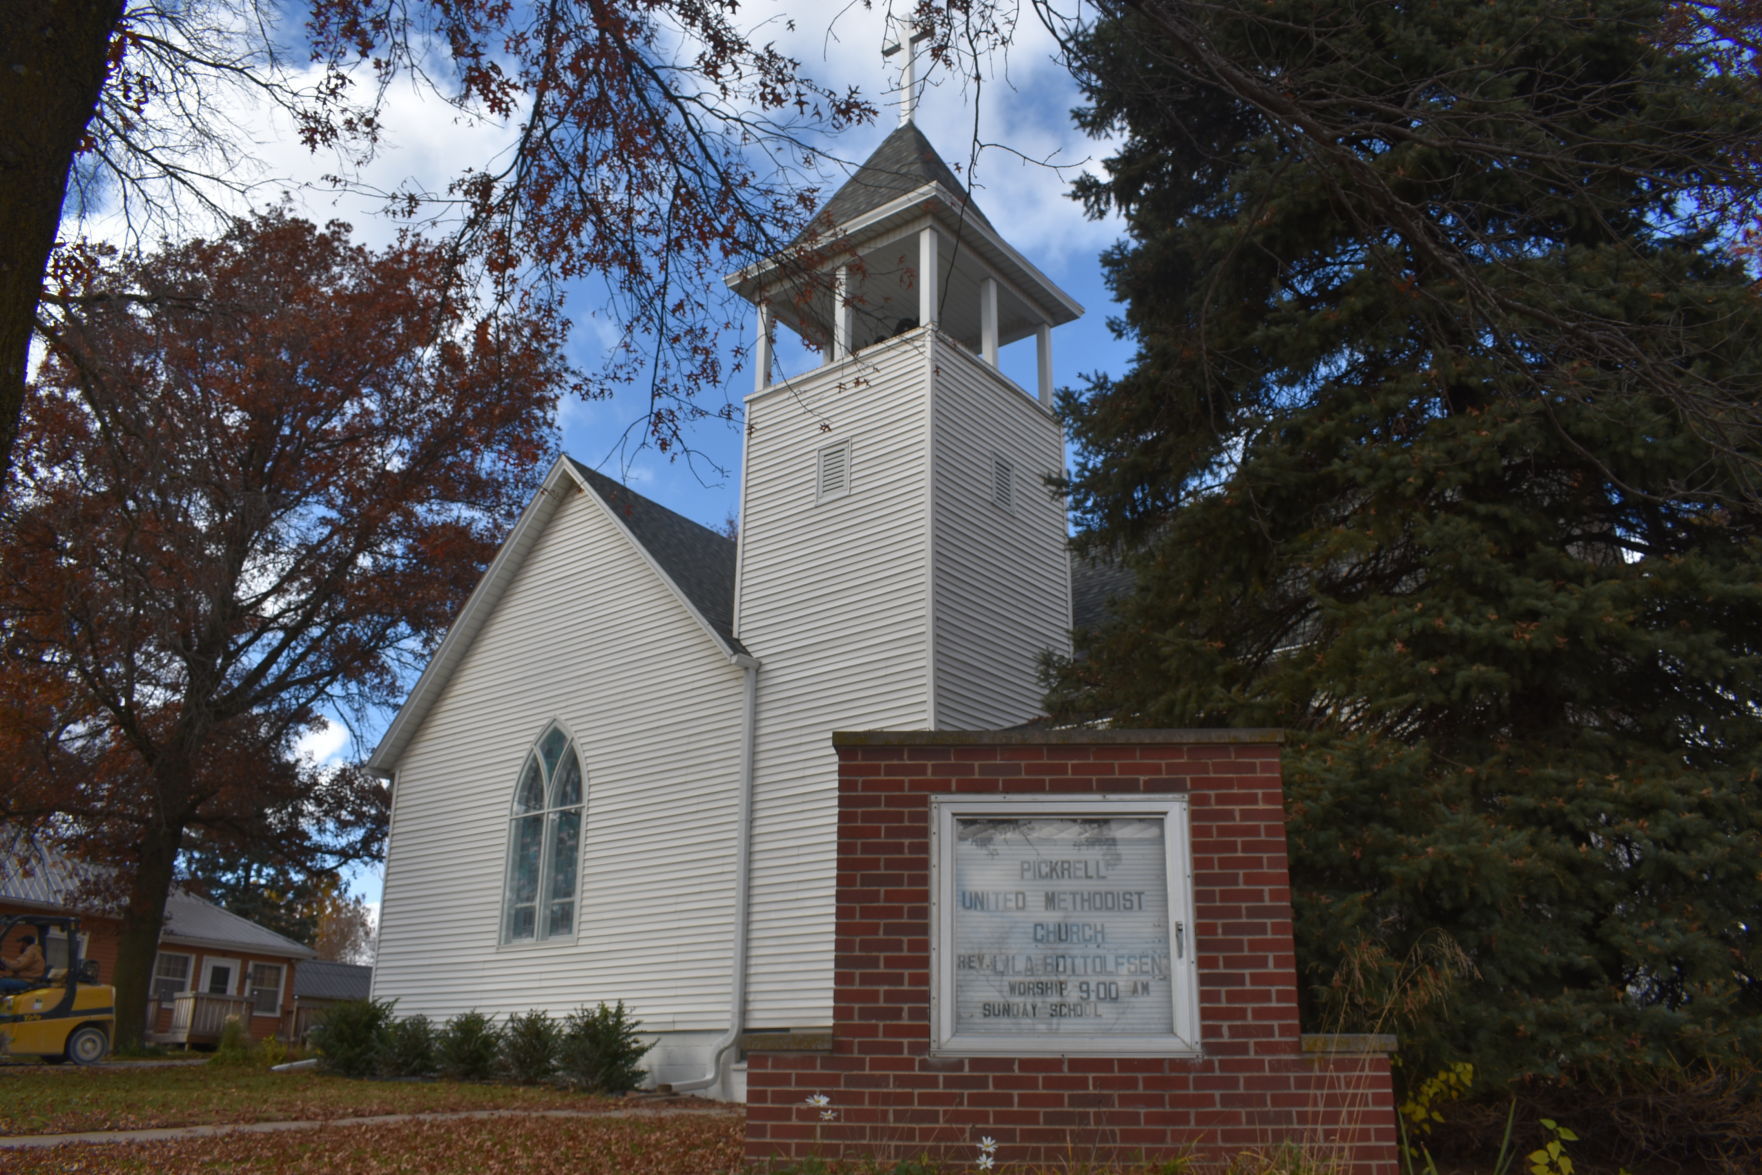 Pickrell church celebrates 130th anniversary